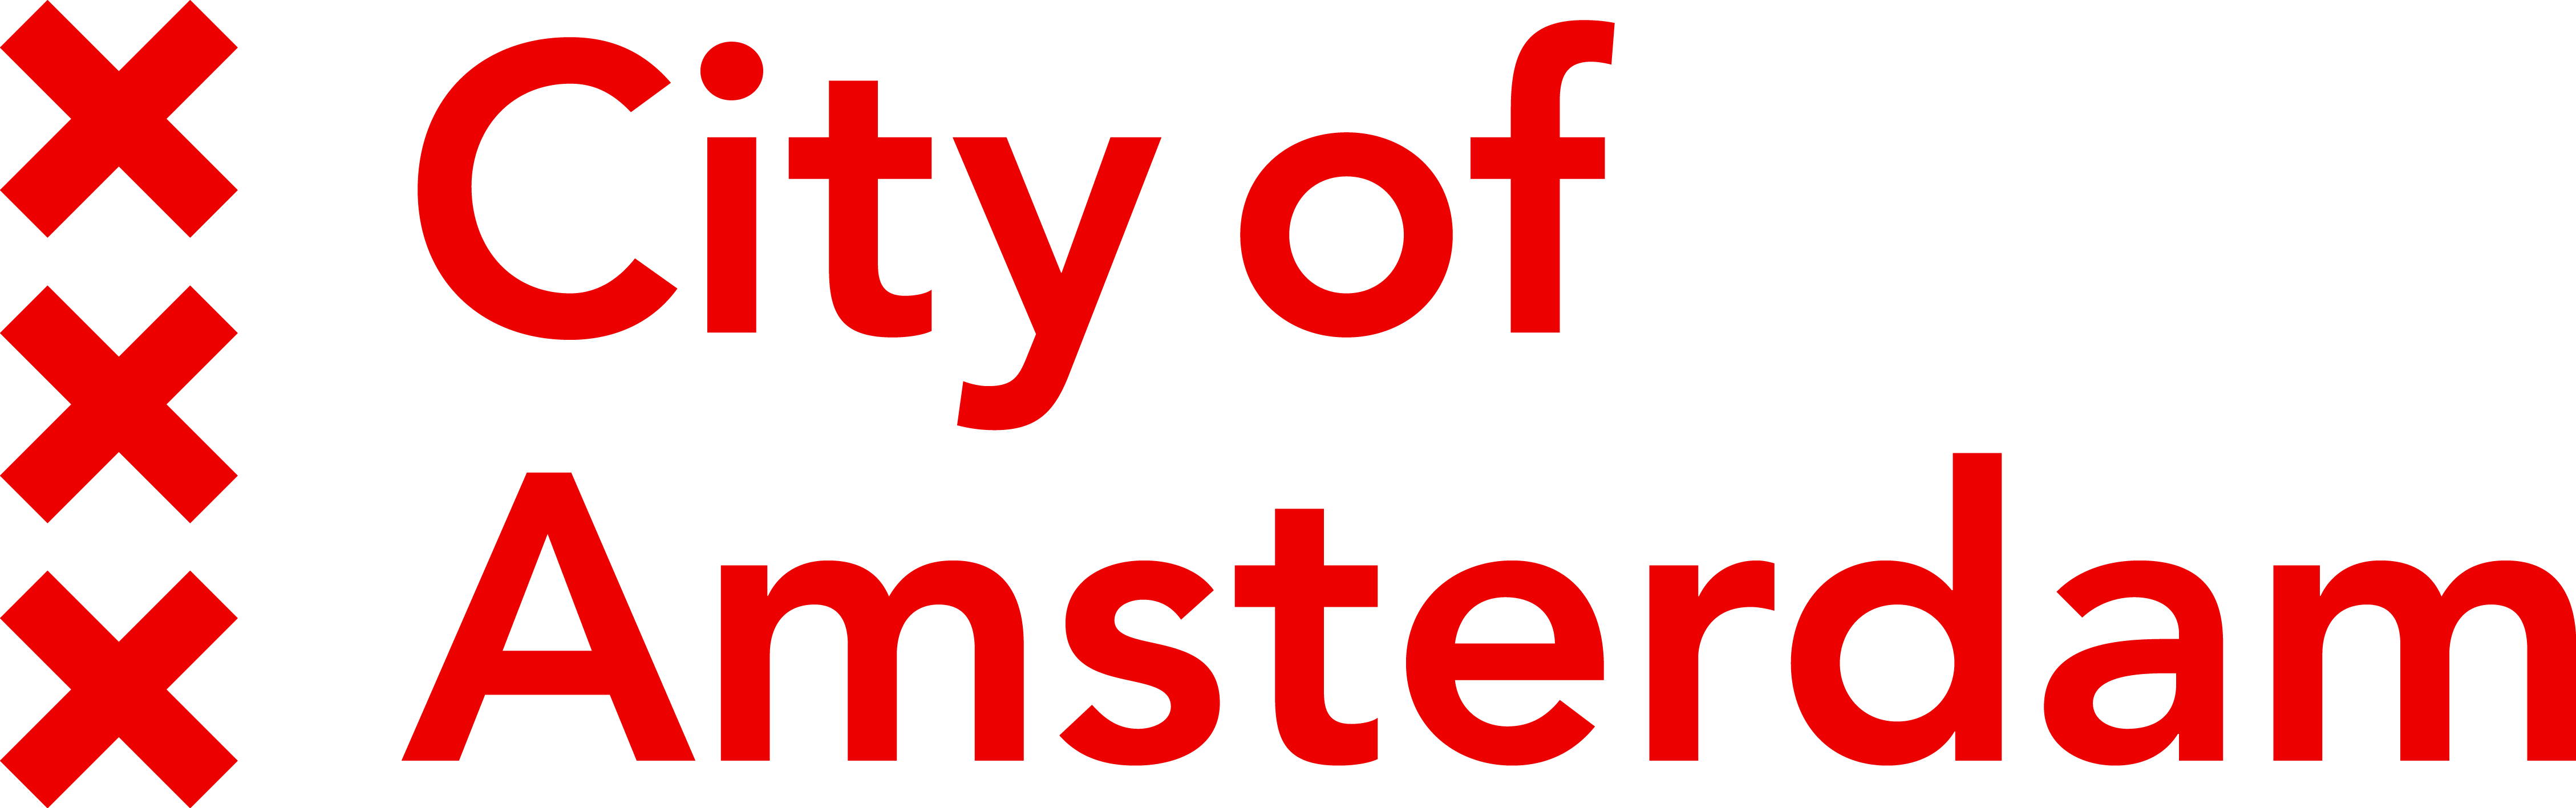 Amsterdam City logo